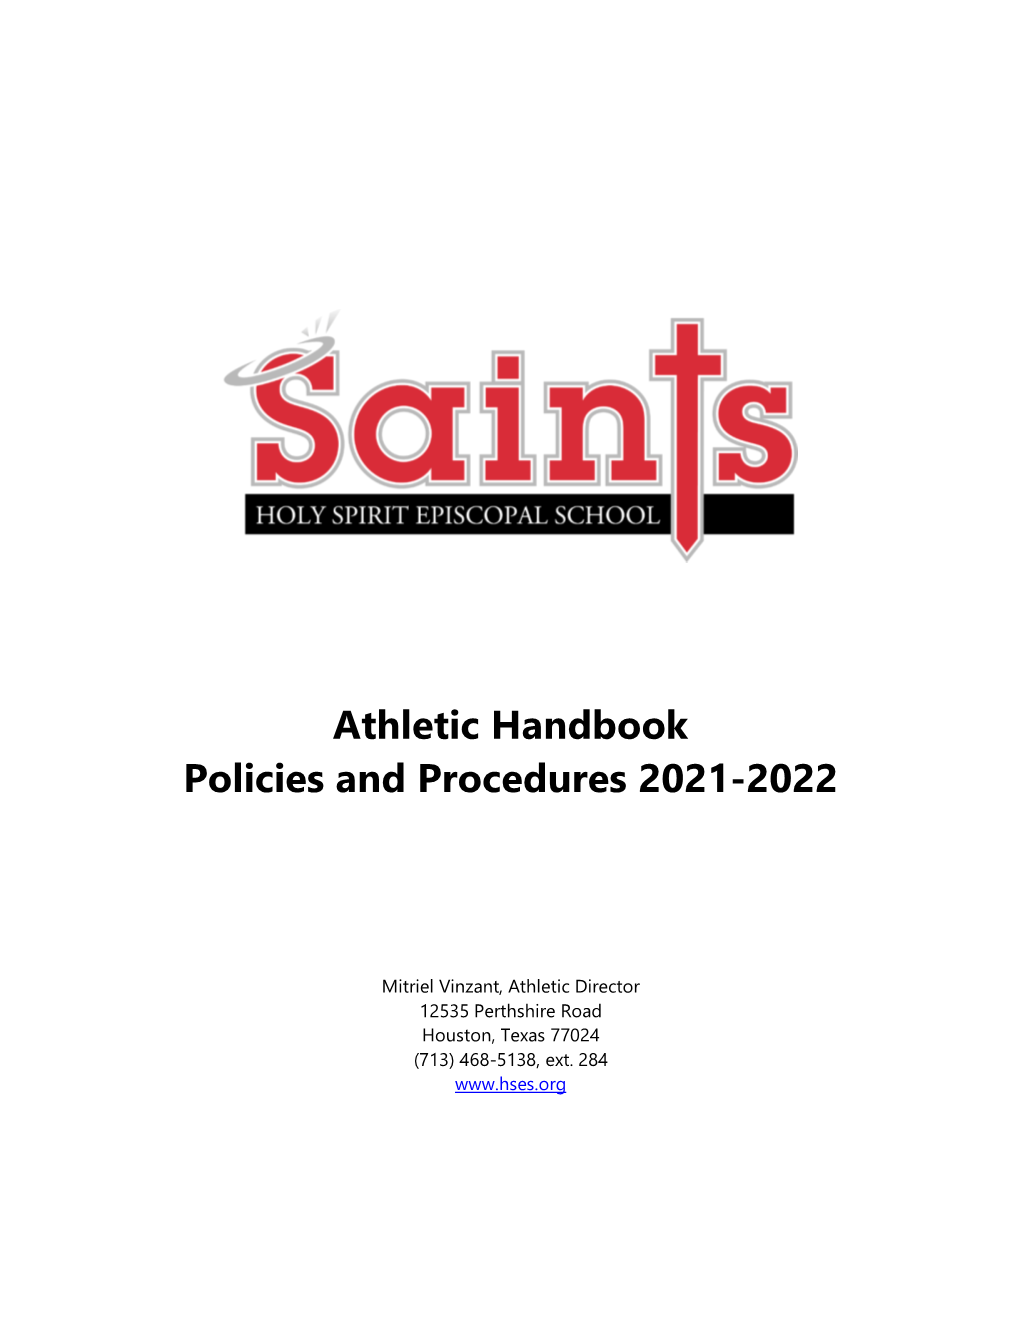 Athletic Handbook Policies and Procedures 2021-2022